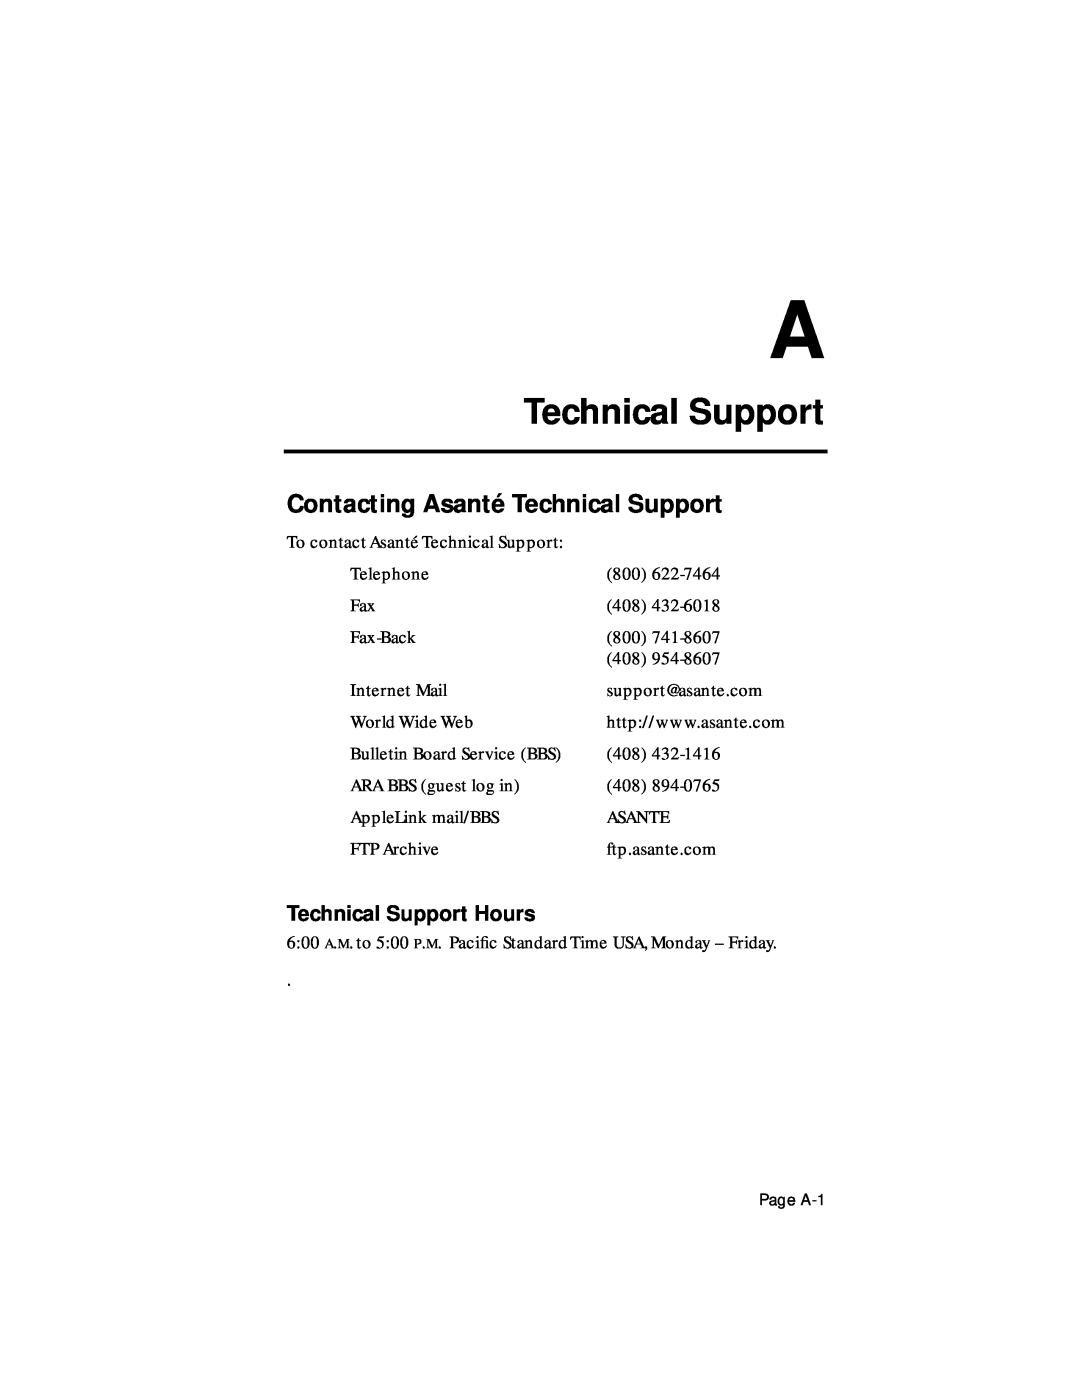 Asante Technologies 1000 user manual Contacting Asanté Technical Support, Technical Support Hours 